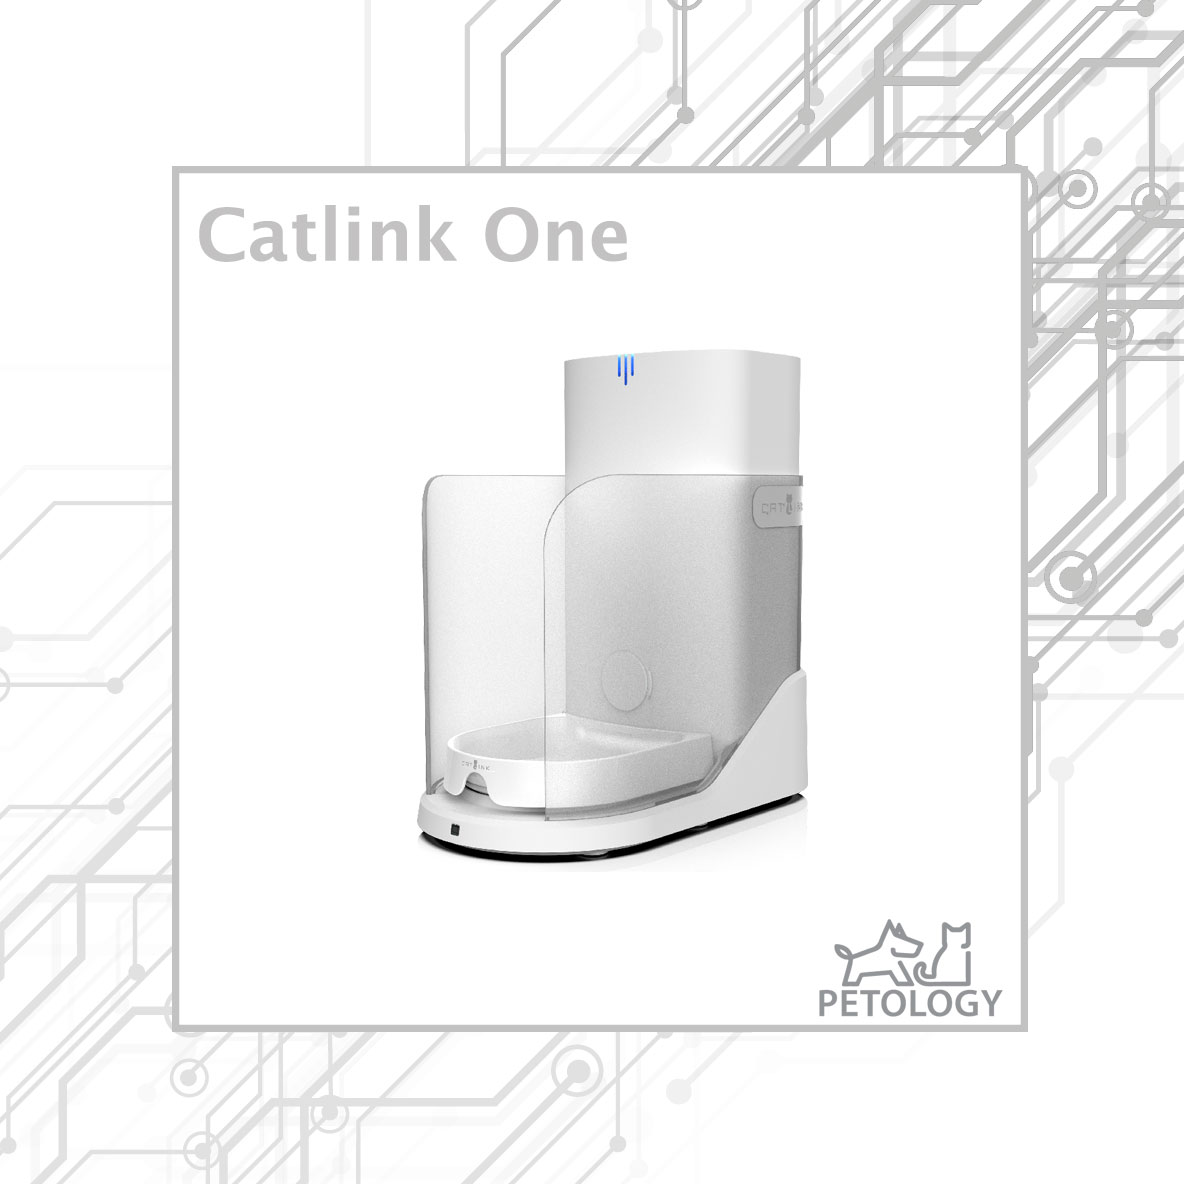 Petology - เครื่องให้อาหารอัตโนมัติ Catlink One